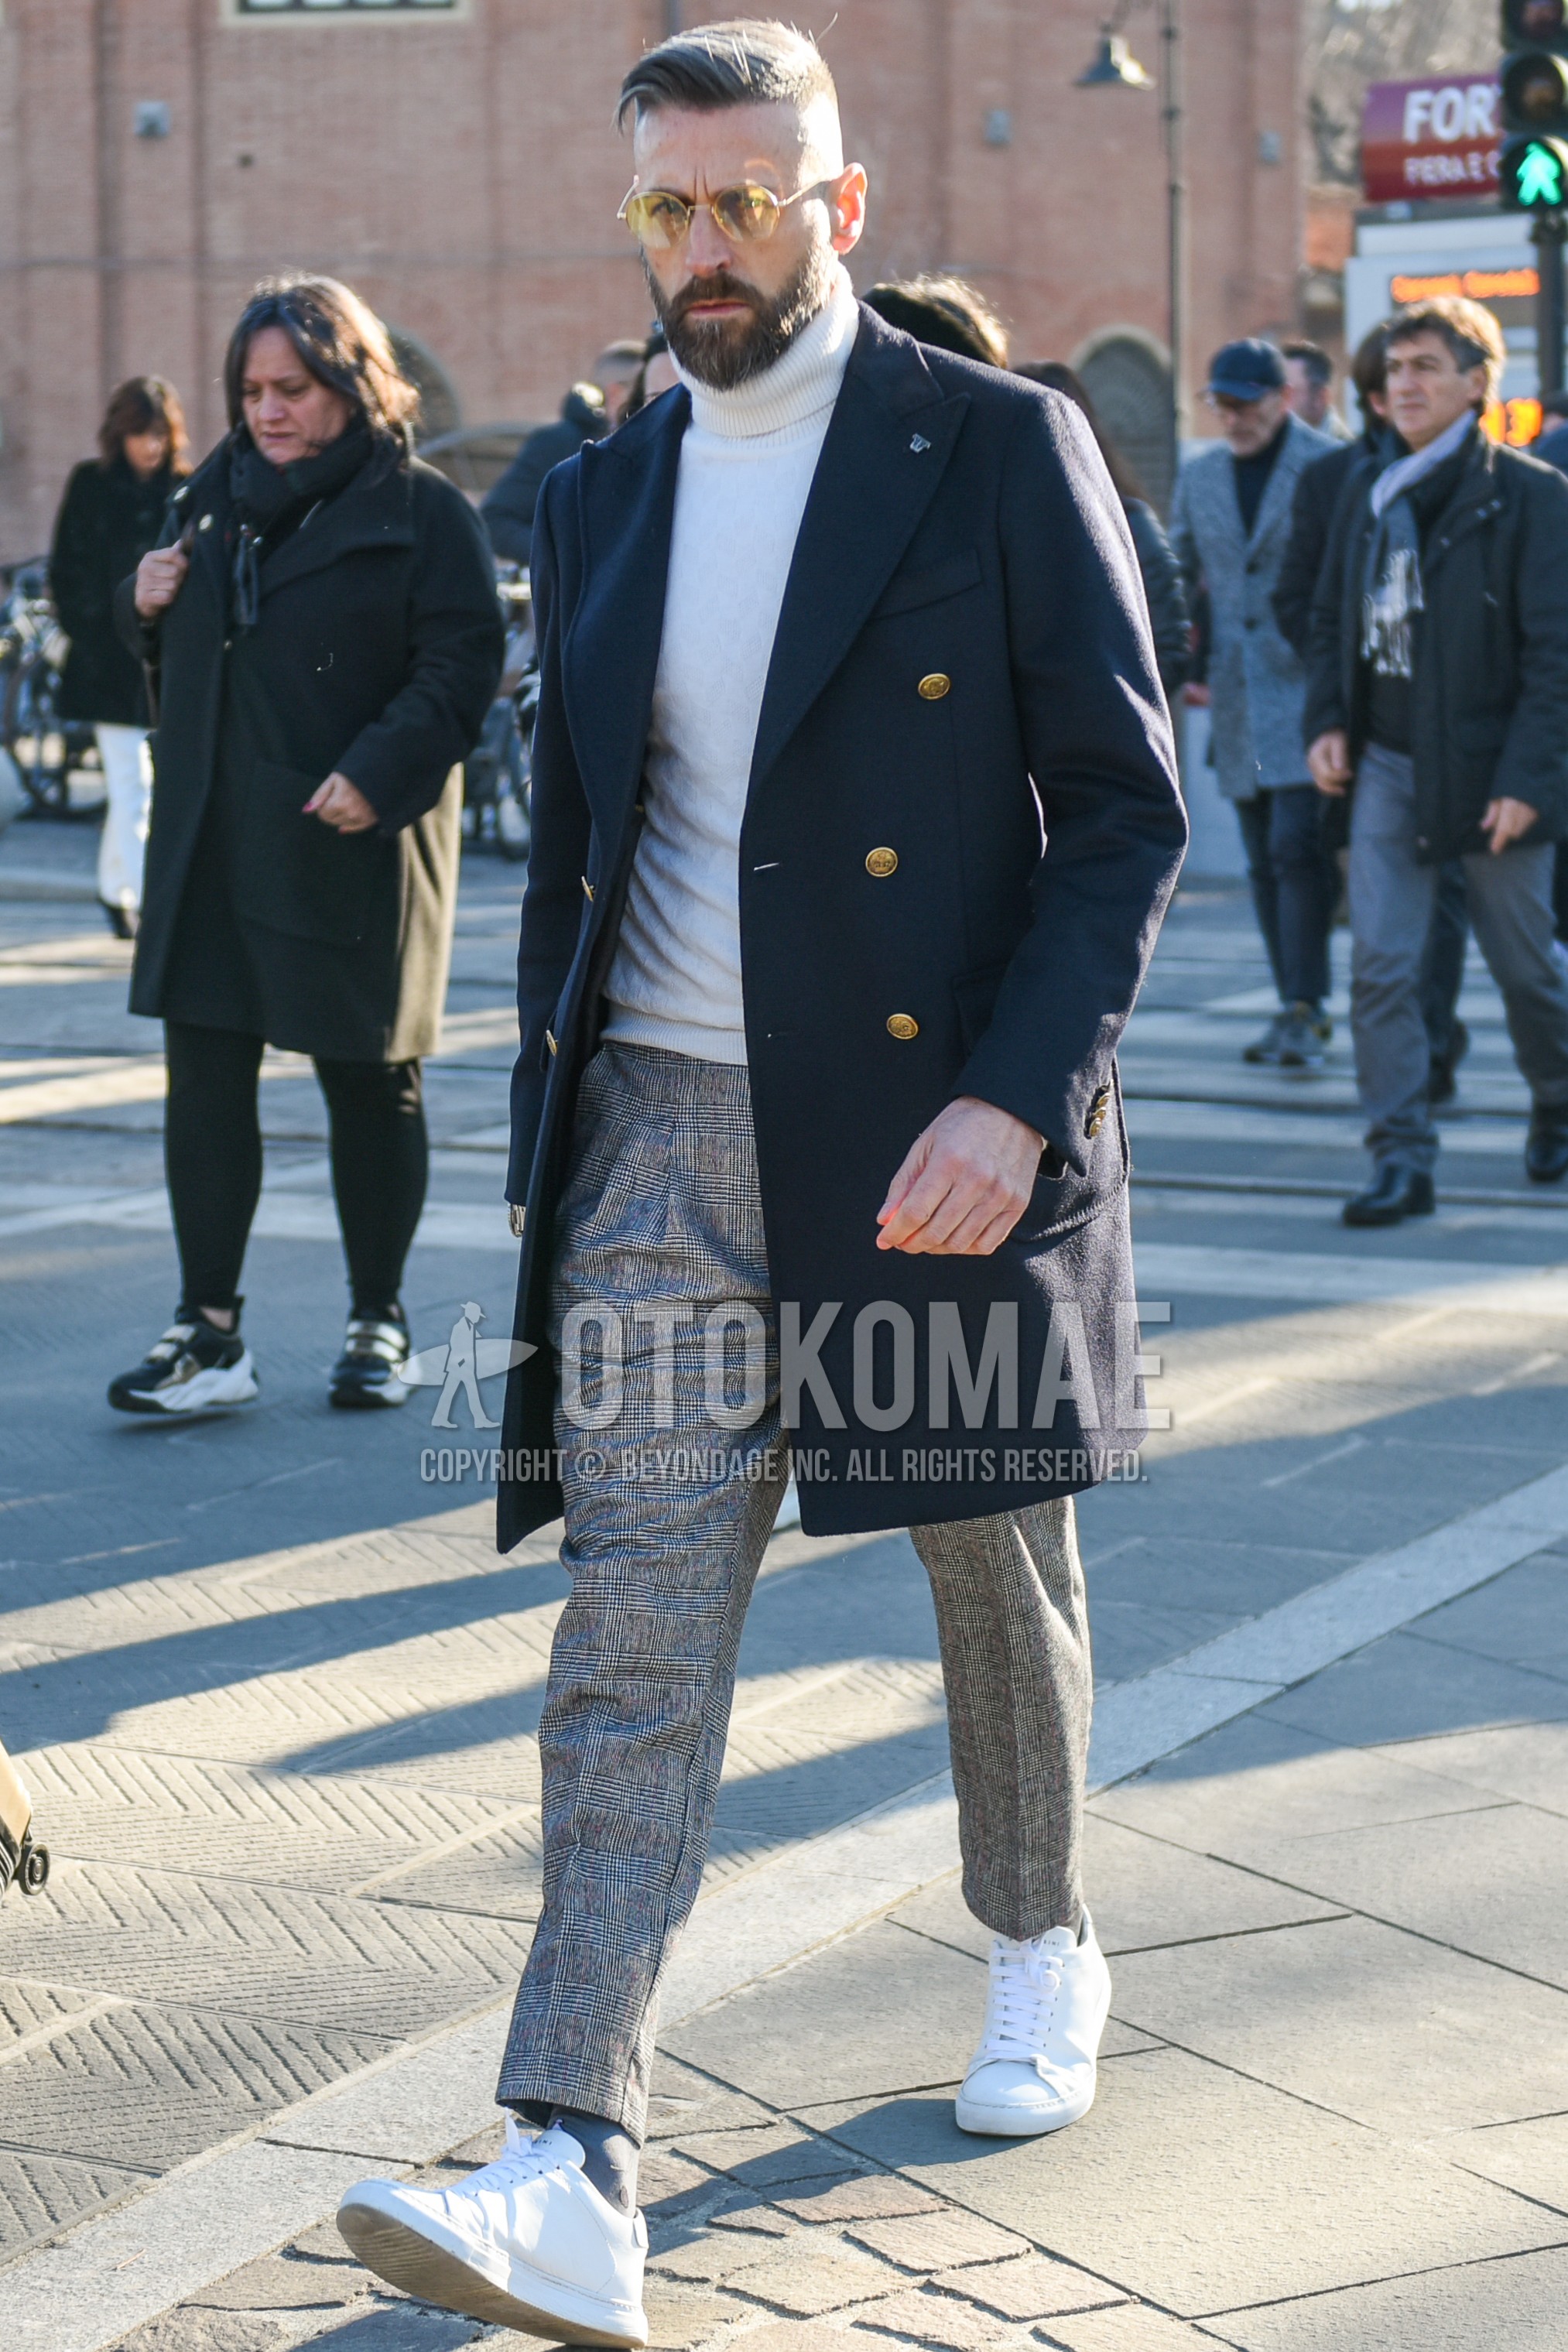 Men's autumn winter outfit with silver plain sunglasses, dark gray plain chester coat, white plain turtleneck knit, gray check slacks, gray check ankle pants, gray plain socks, white low-cut sneakers.